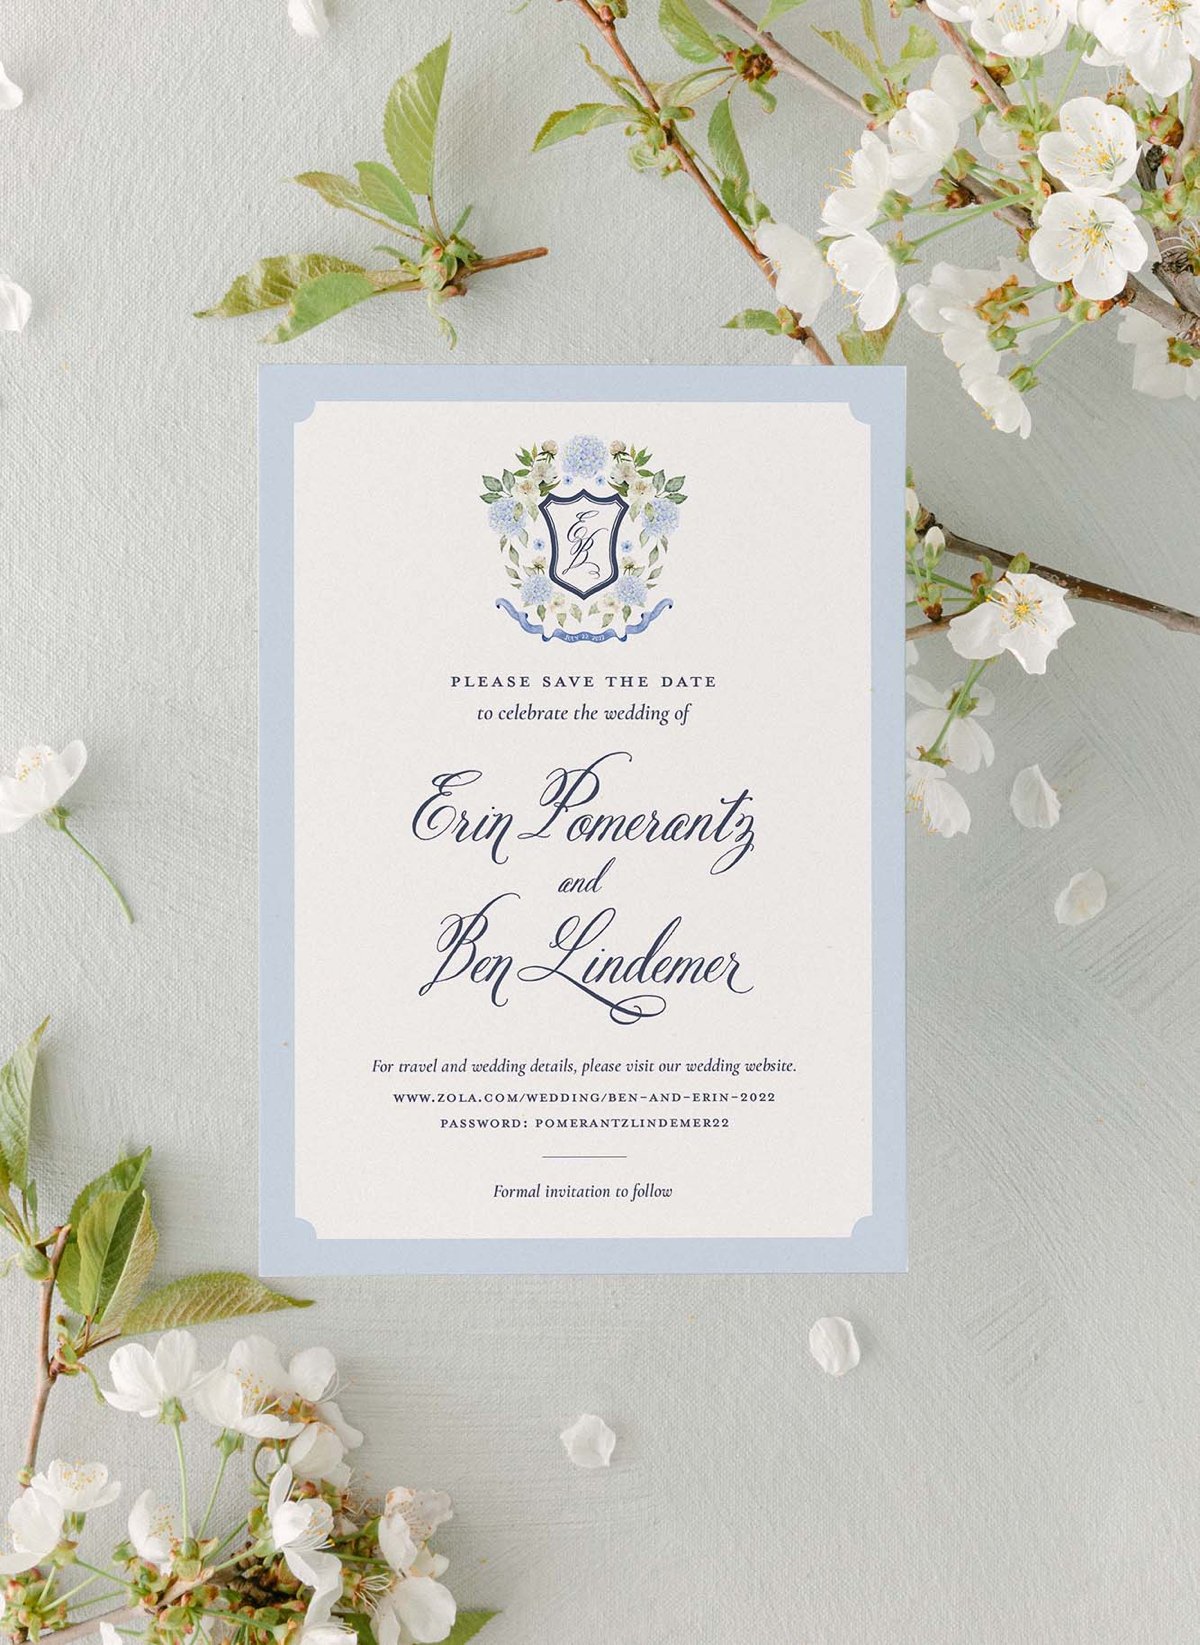 Wedding crest to personalize wedding invitations